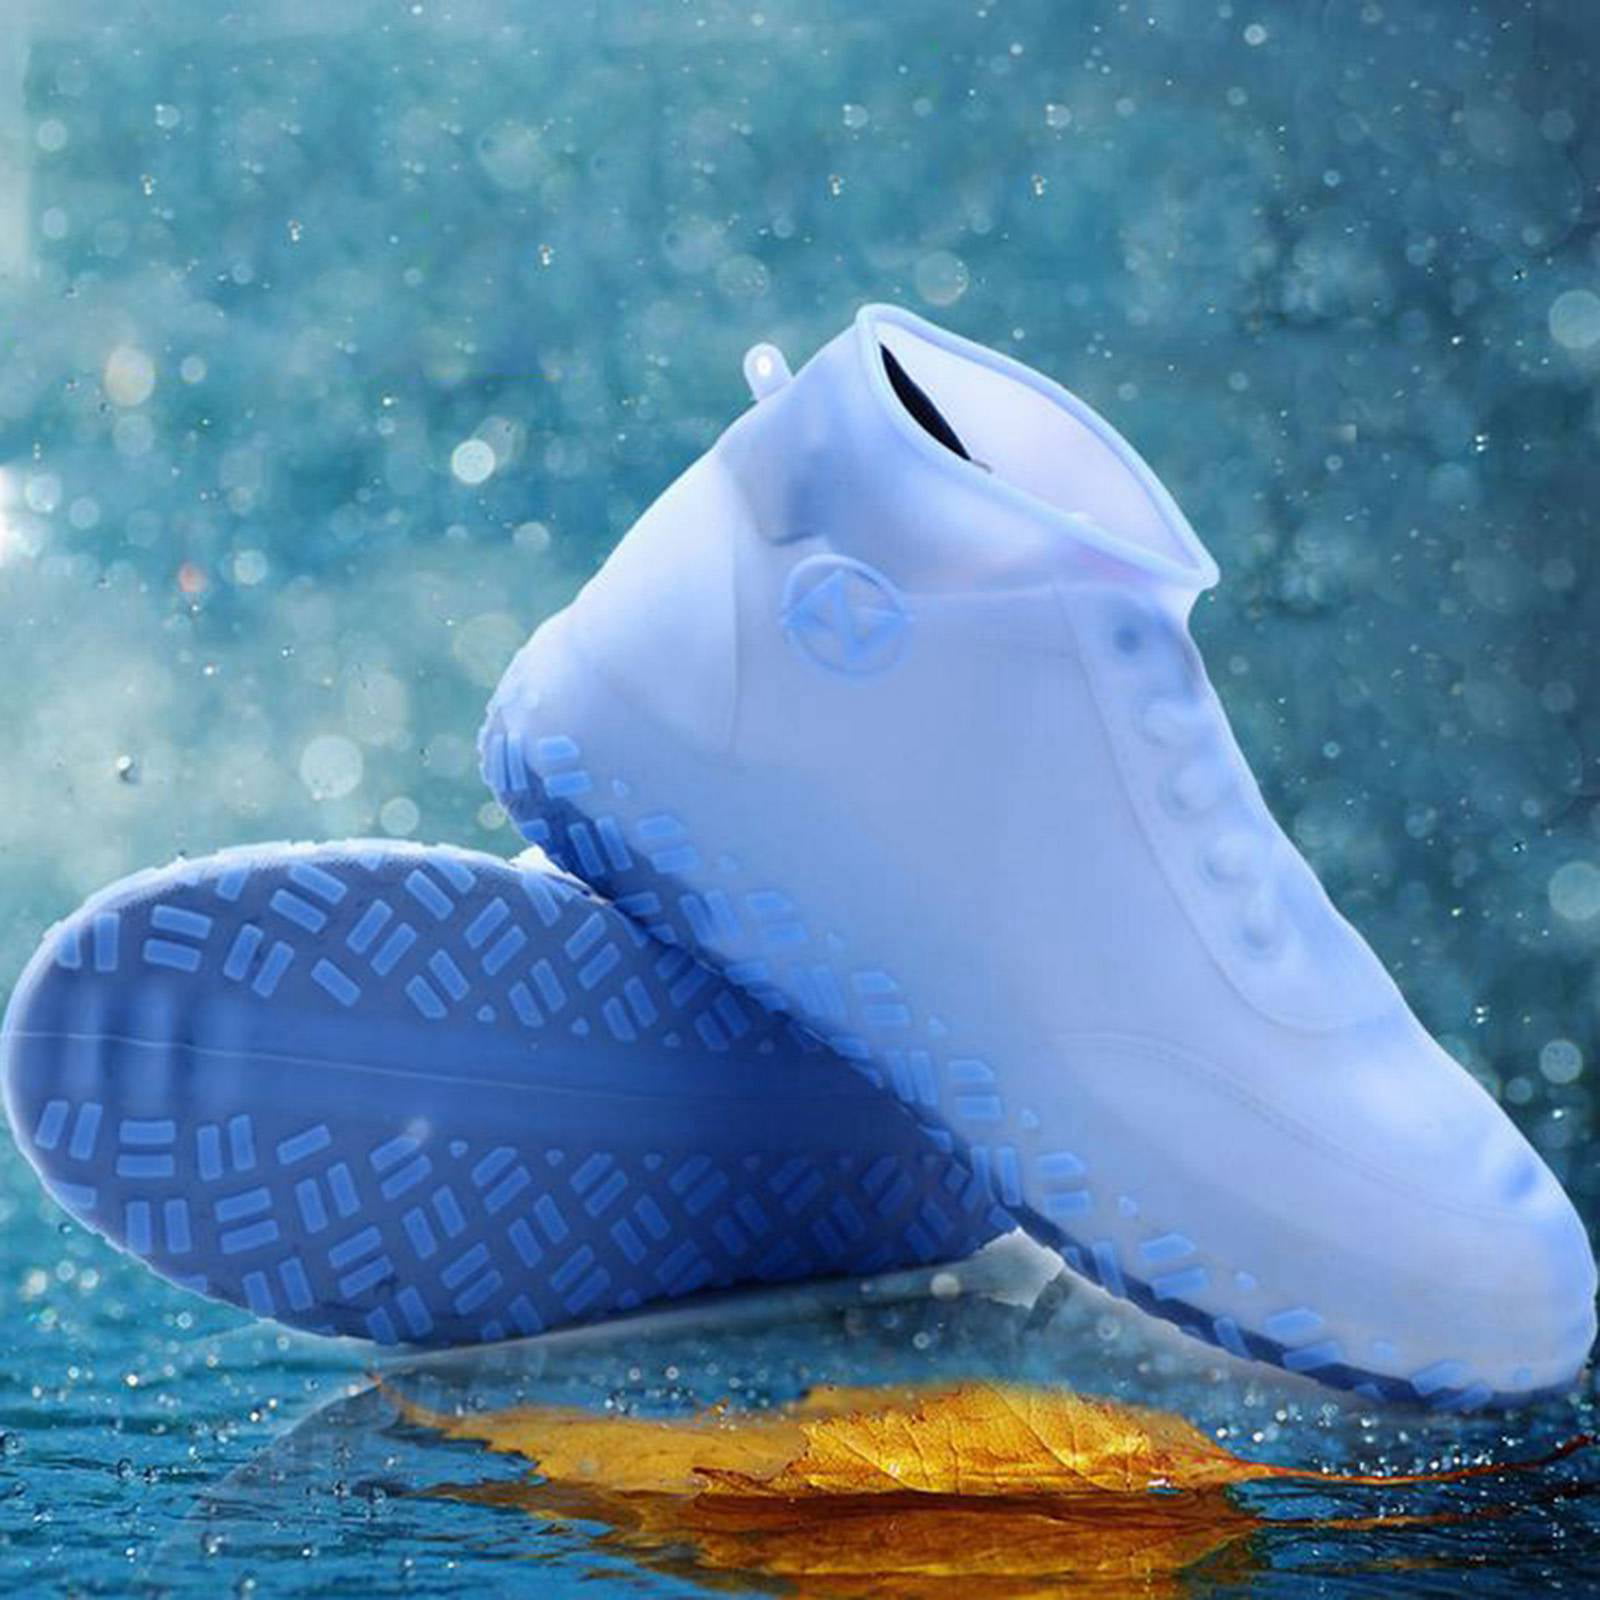 Men/Women Shoes Covers Silicone Reusable Non-slip Rain Flats Boots Cover Set RA 